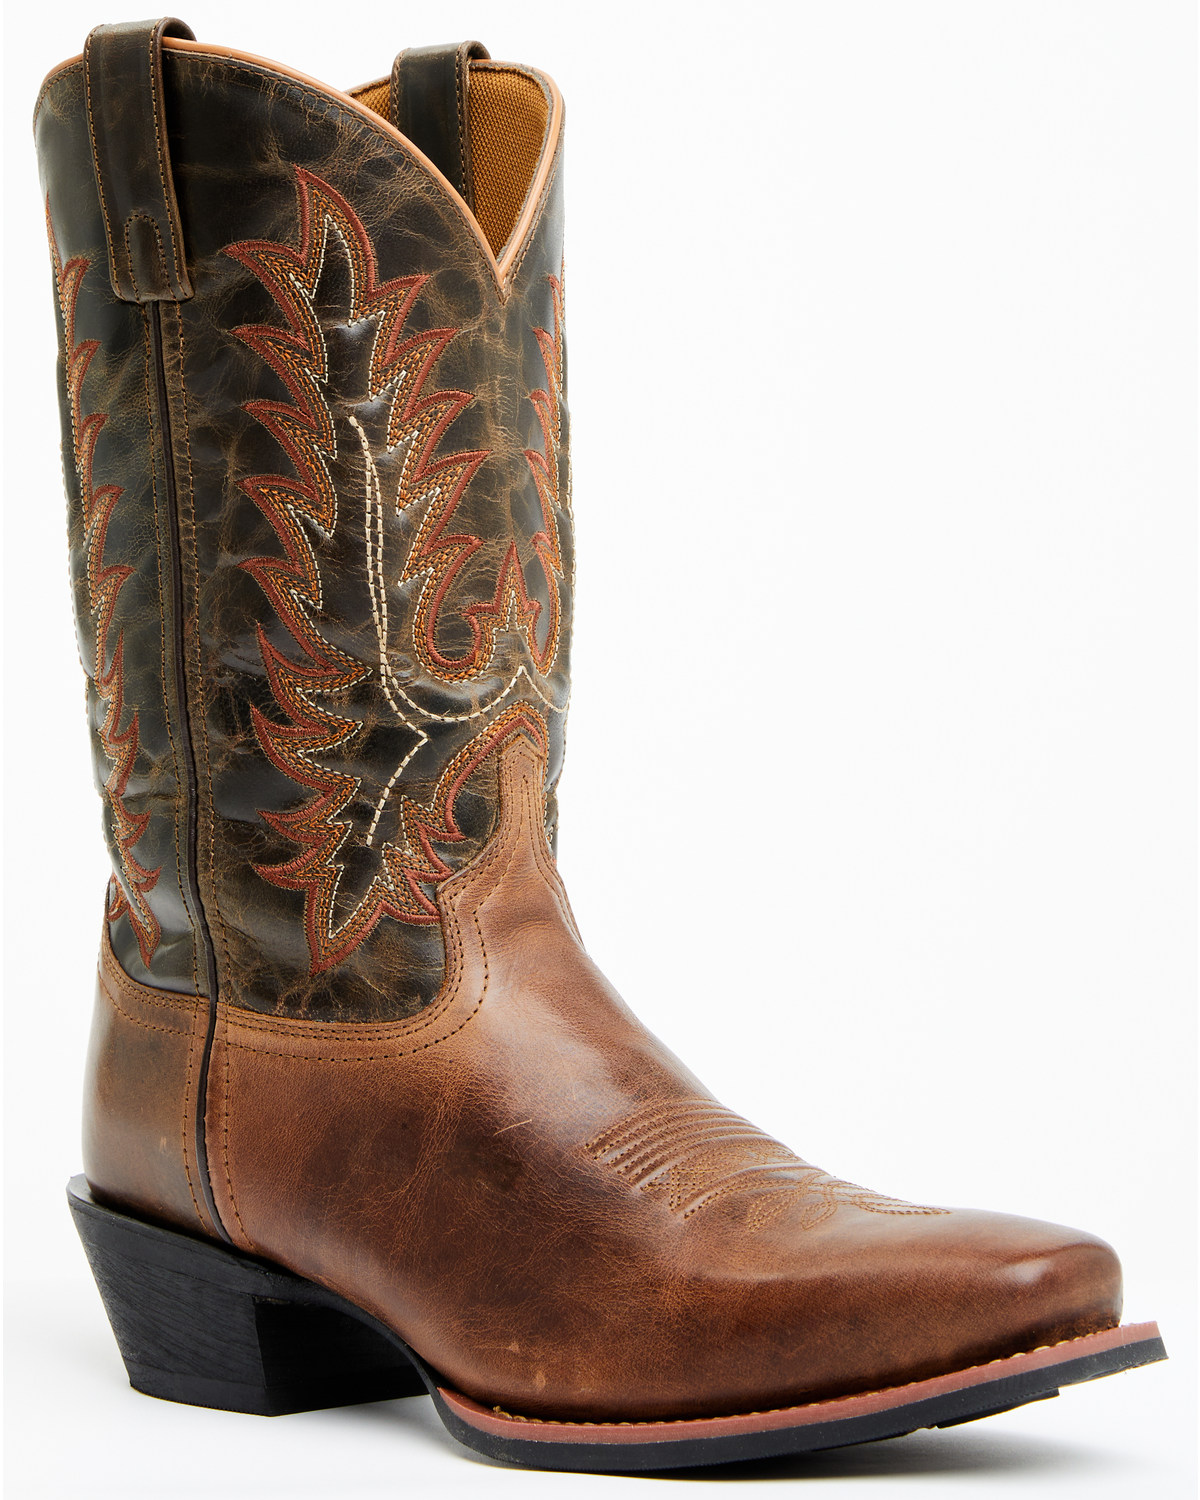 Laredo Women's Kent Performance Western Boots - Square Toe